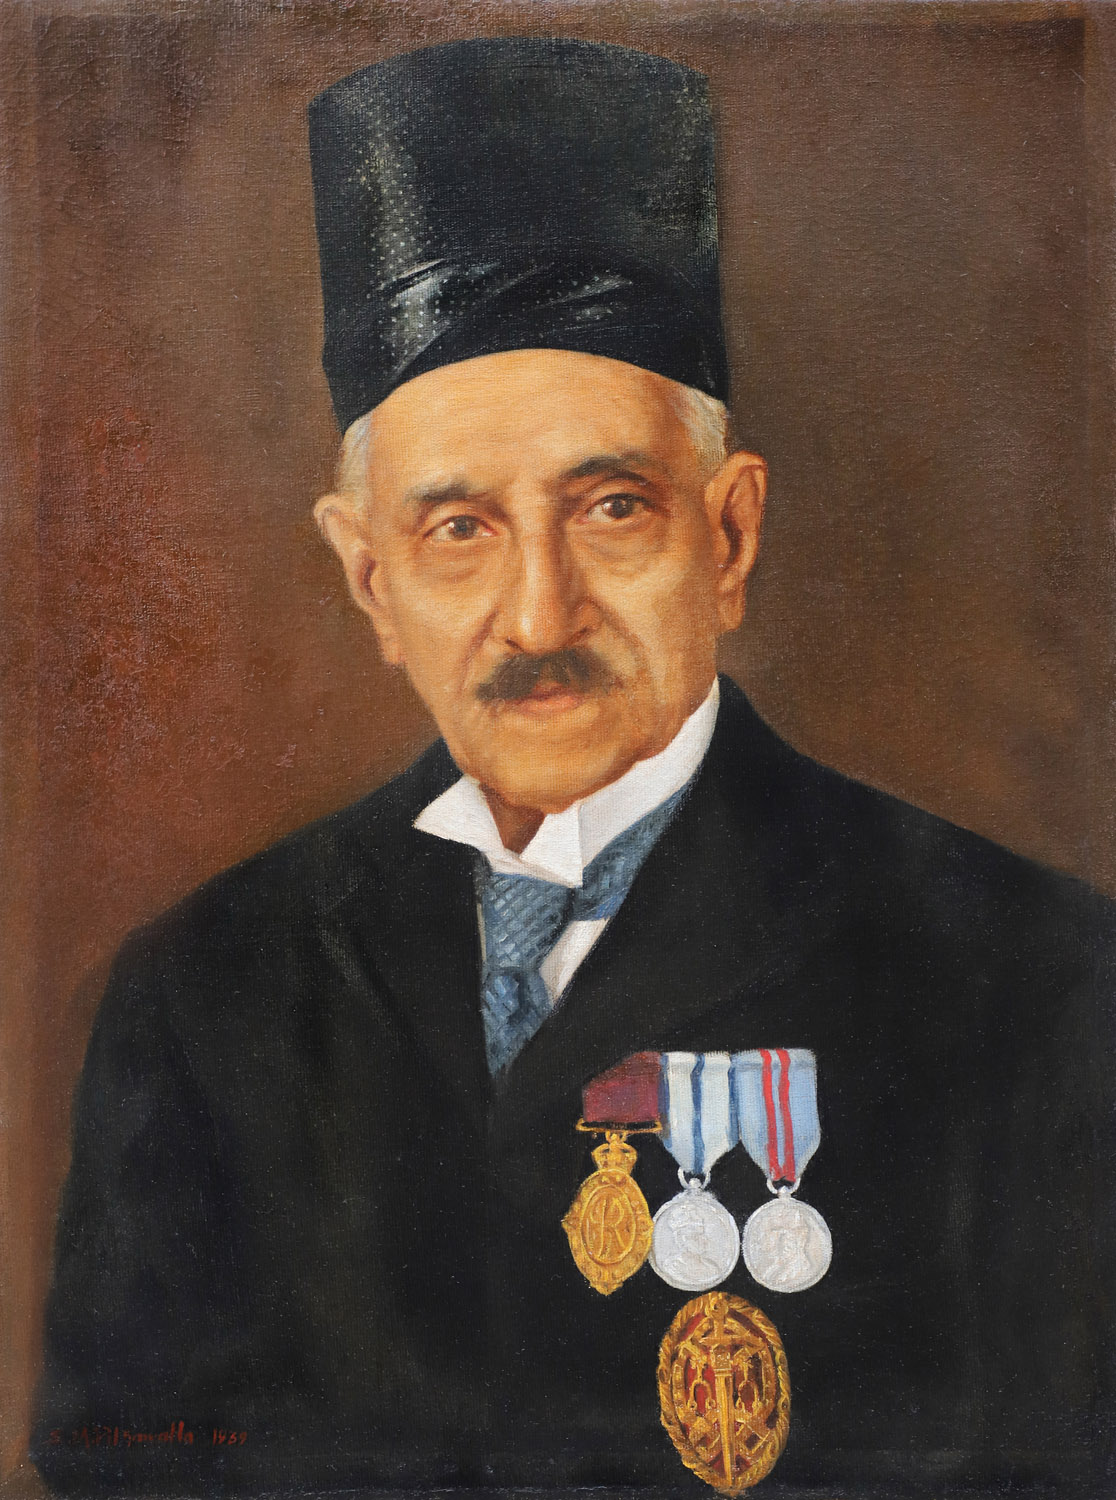 Sir Tehmulji Bhicaji Nariman